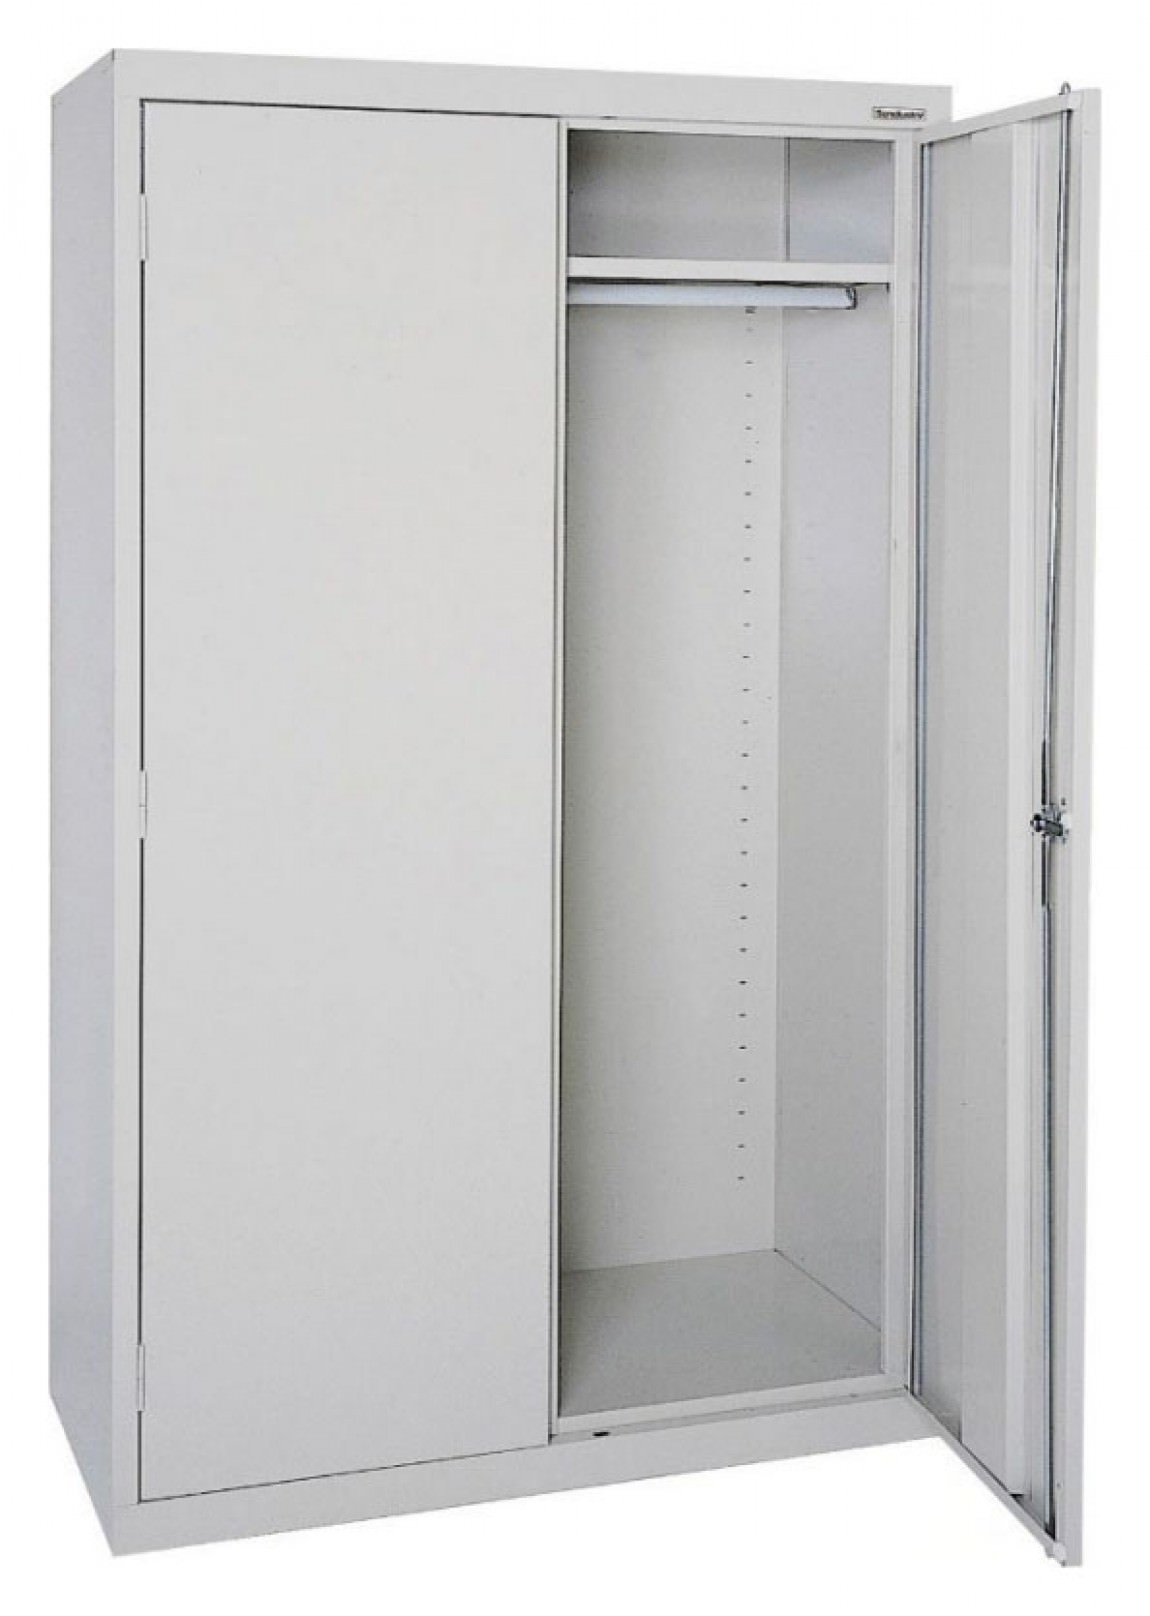 SANDUSKY 46W x 24D x 78H Mobile Transport Storage Cabinets